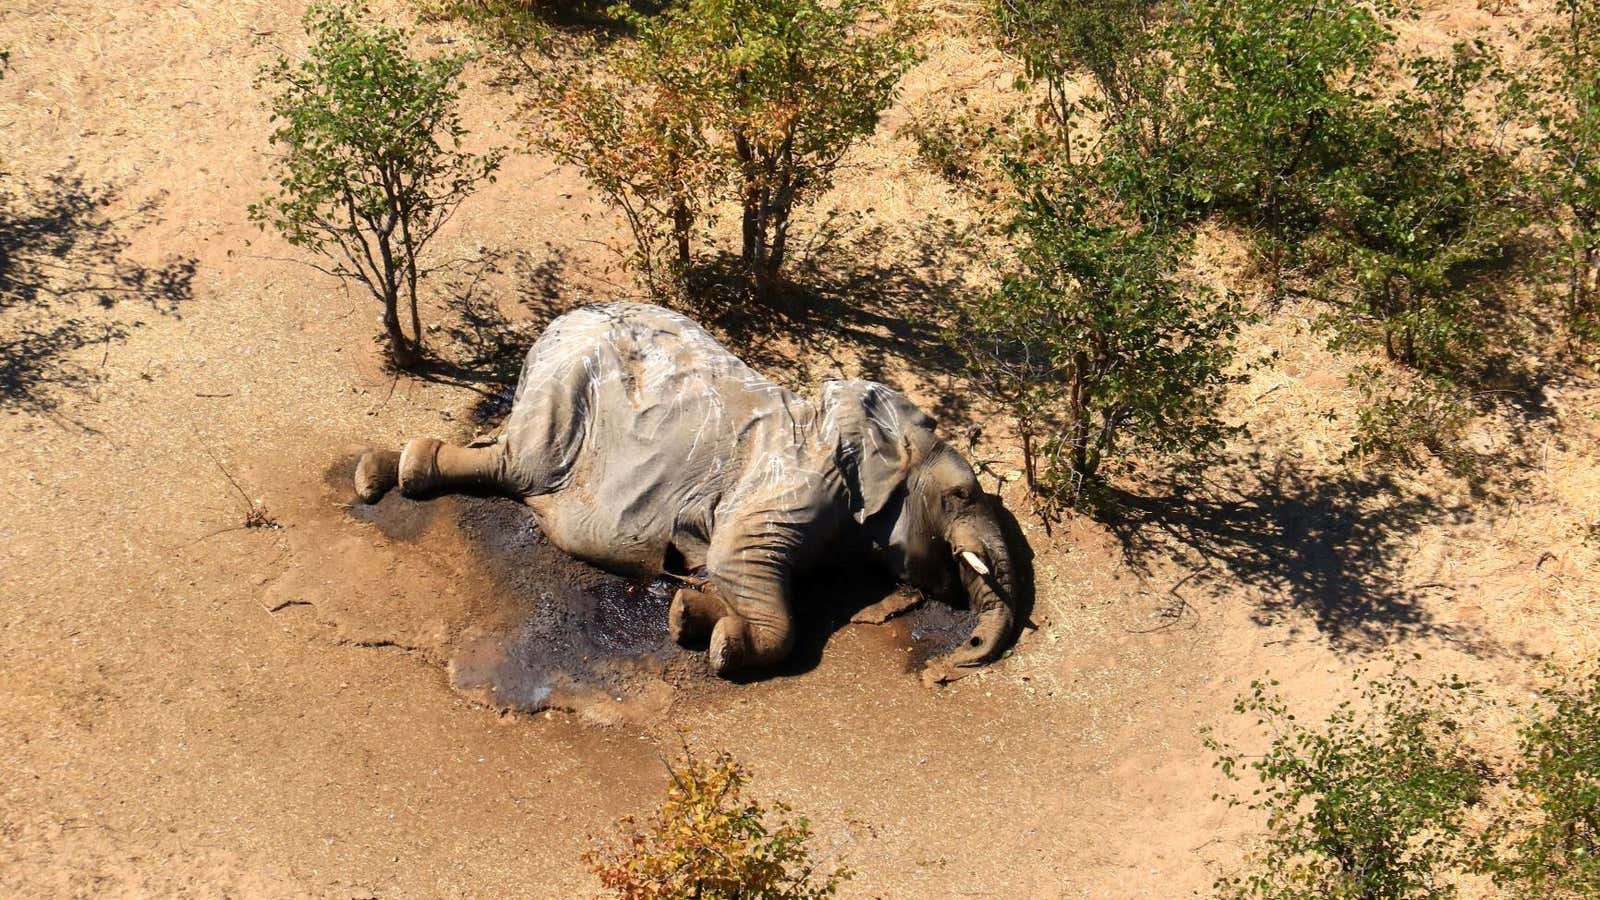 Wild animals kill more people than COVID-19 in Zimbabwe